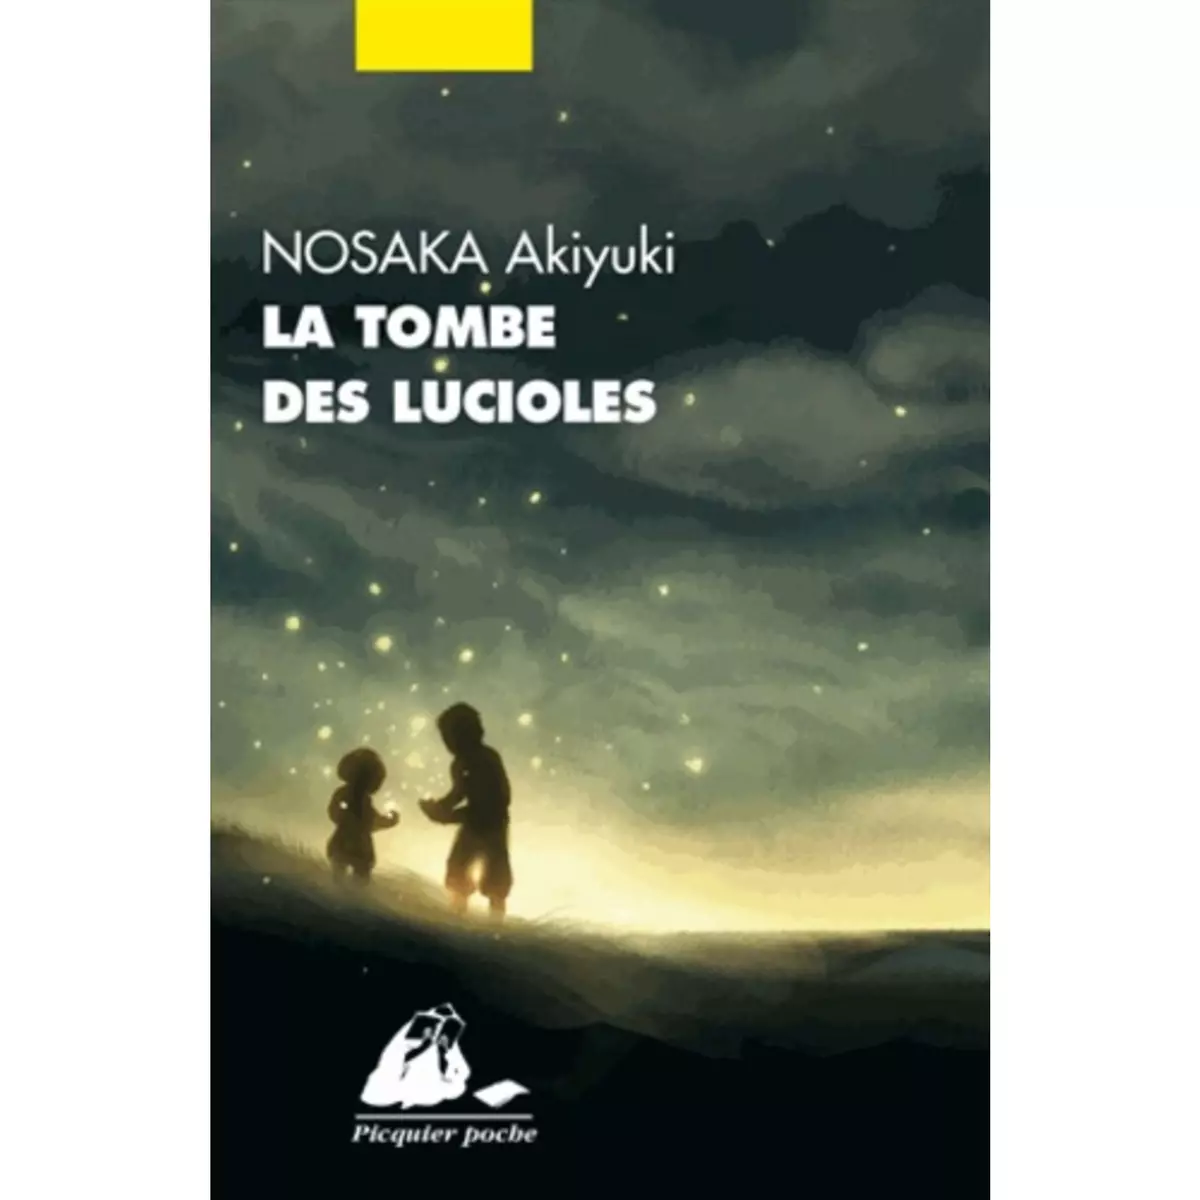  LA TOMBE DES LUCIOLES, Nosaka Akiyuki